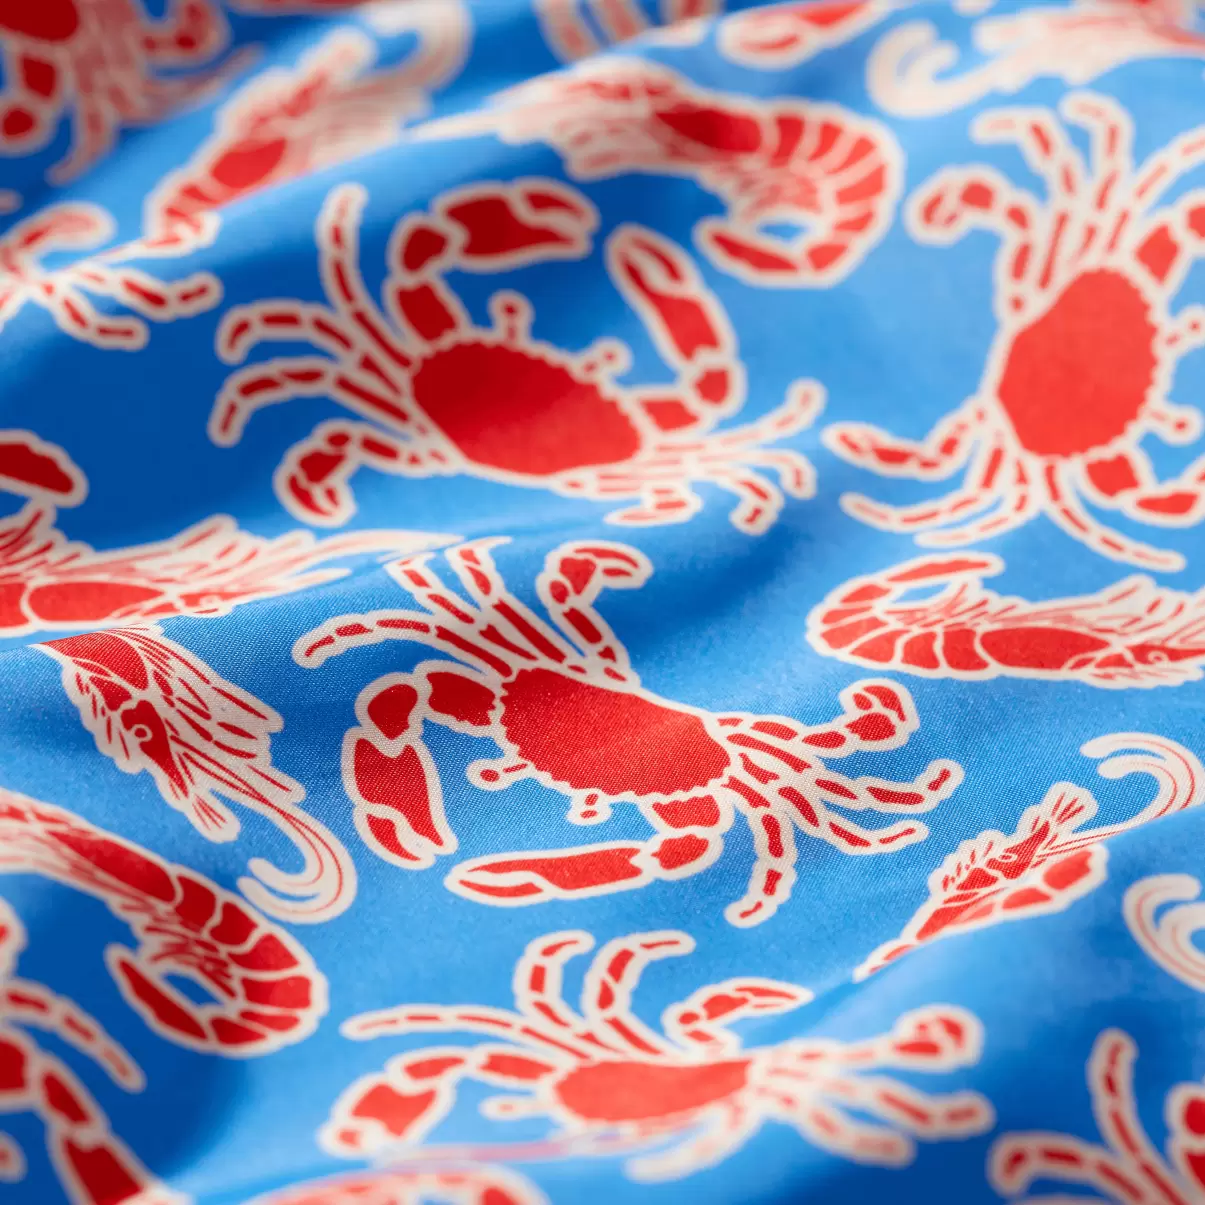 Crabs & Shrimps Tasche Für Kinder Vater Und Sohn Herren Earthenware / Blau Bestellen Vilebrequin - 1